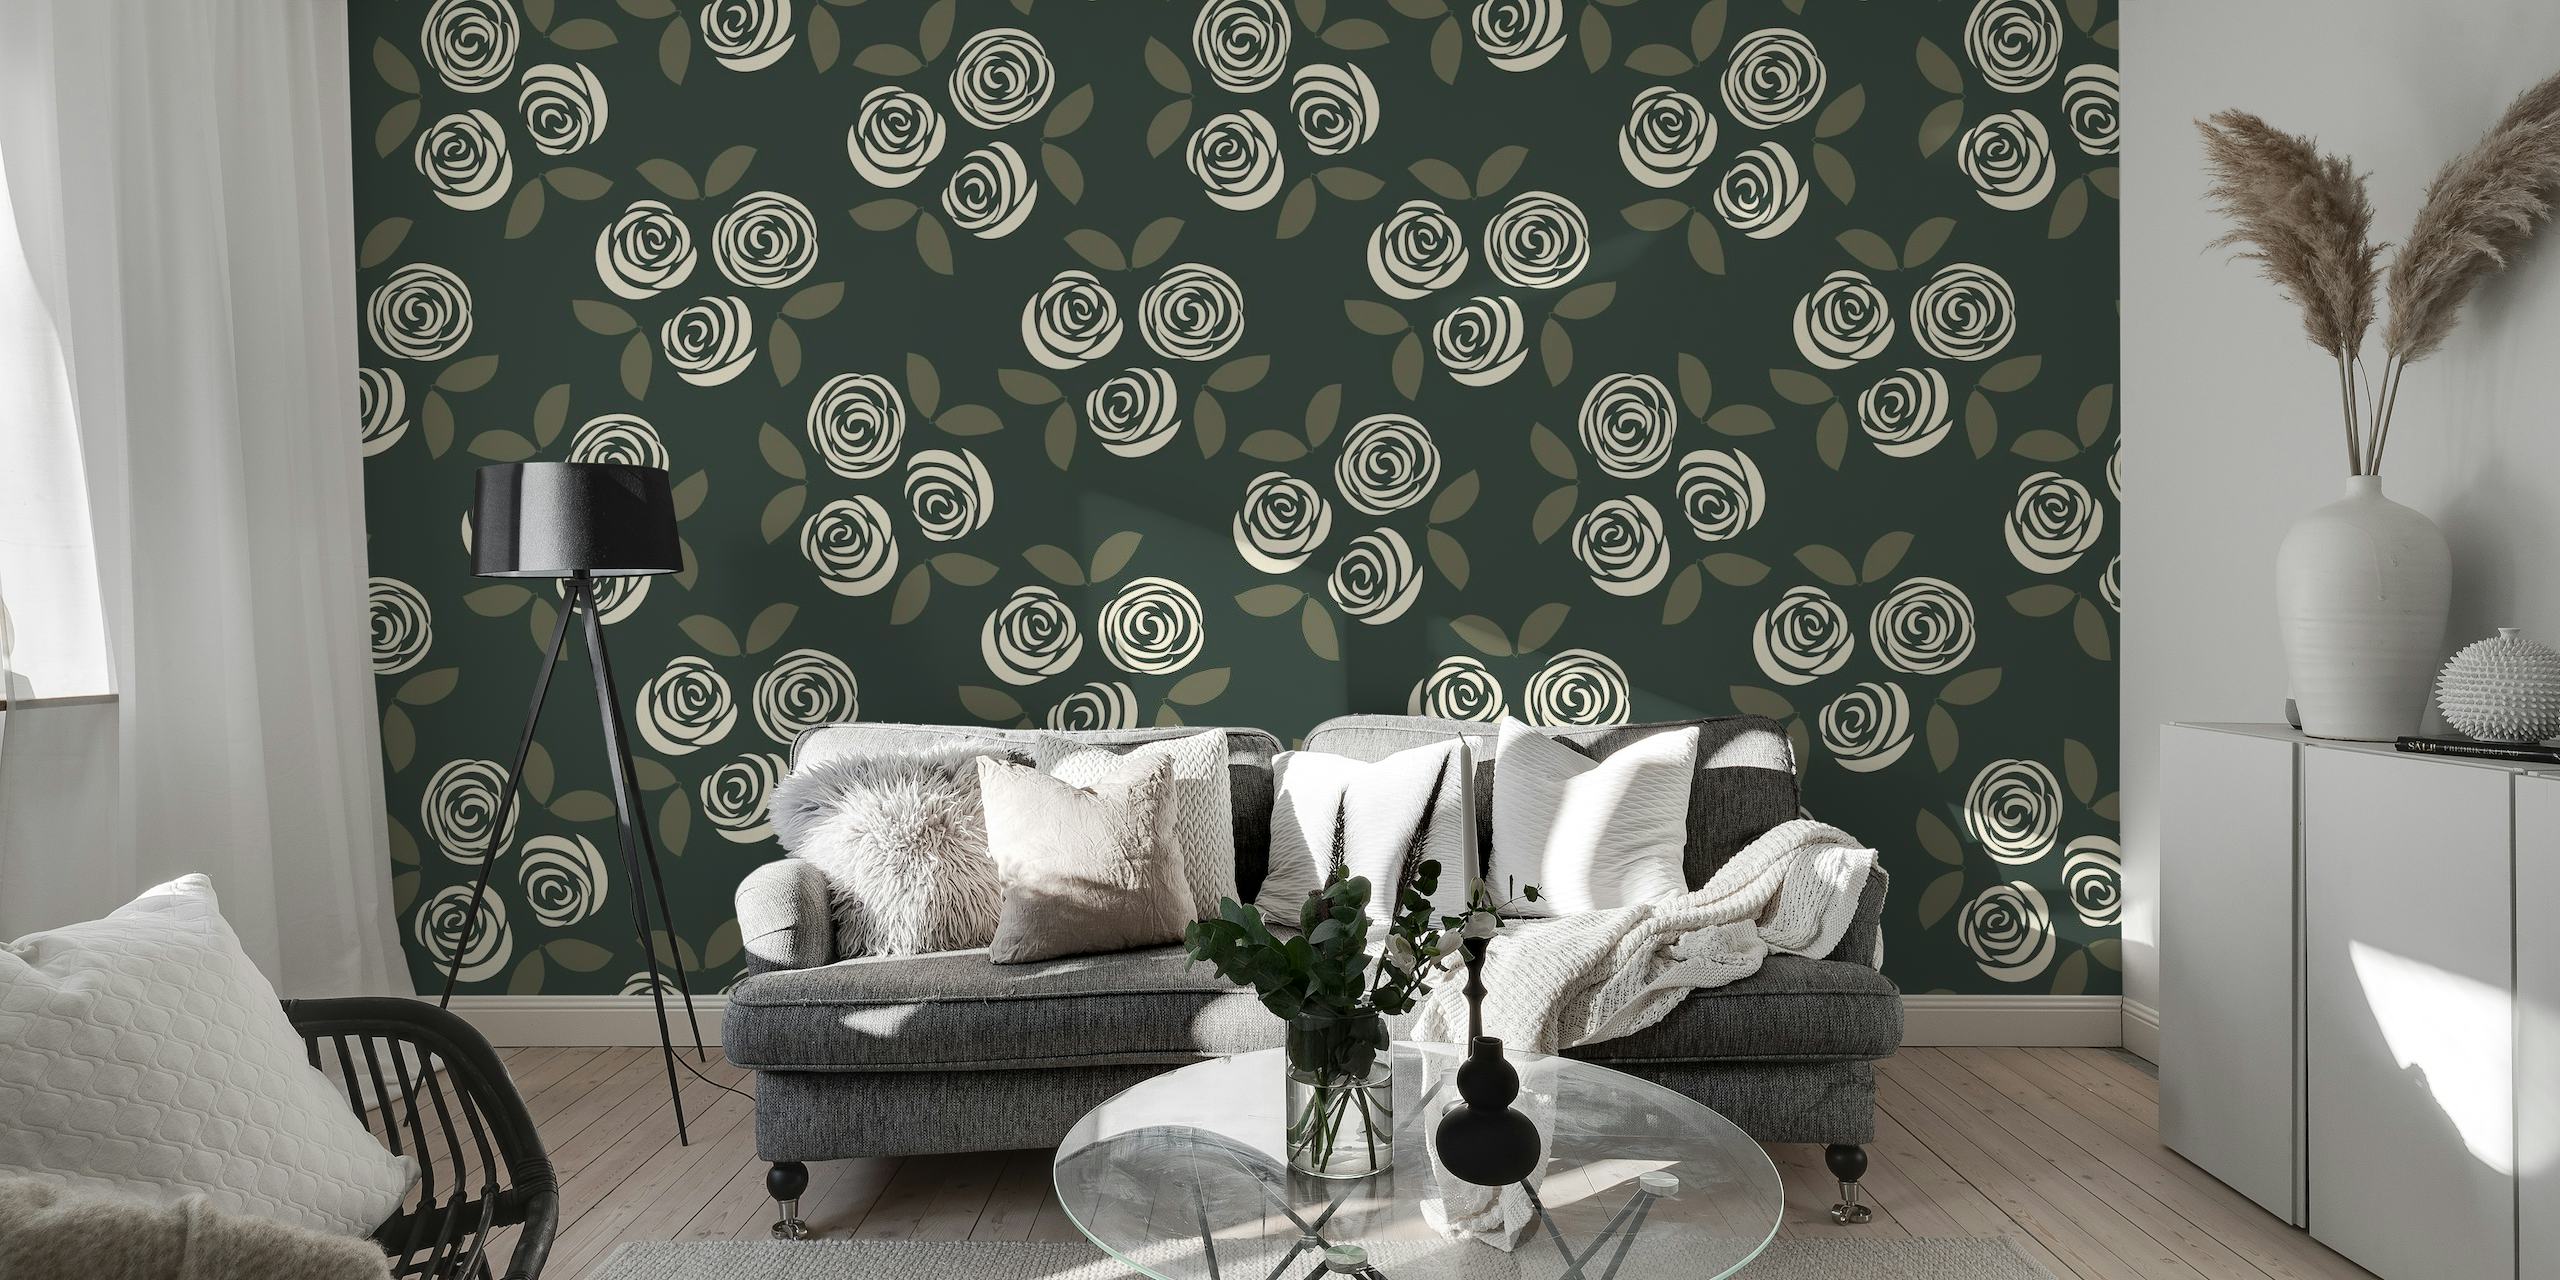 Roses in Dark Background wallpaper